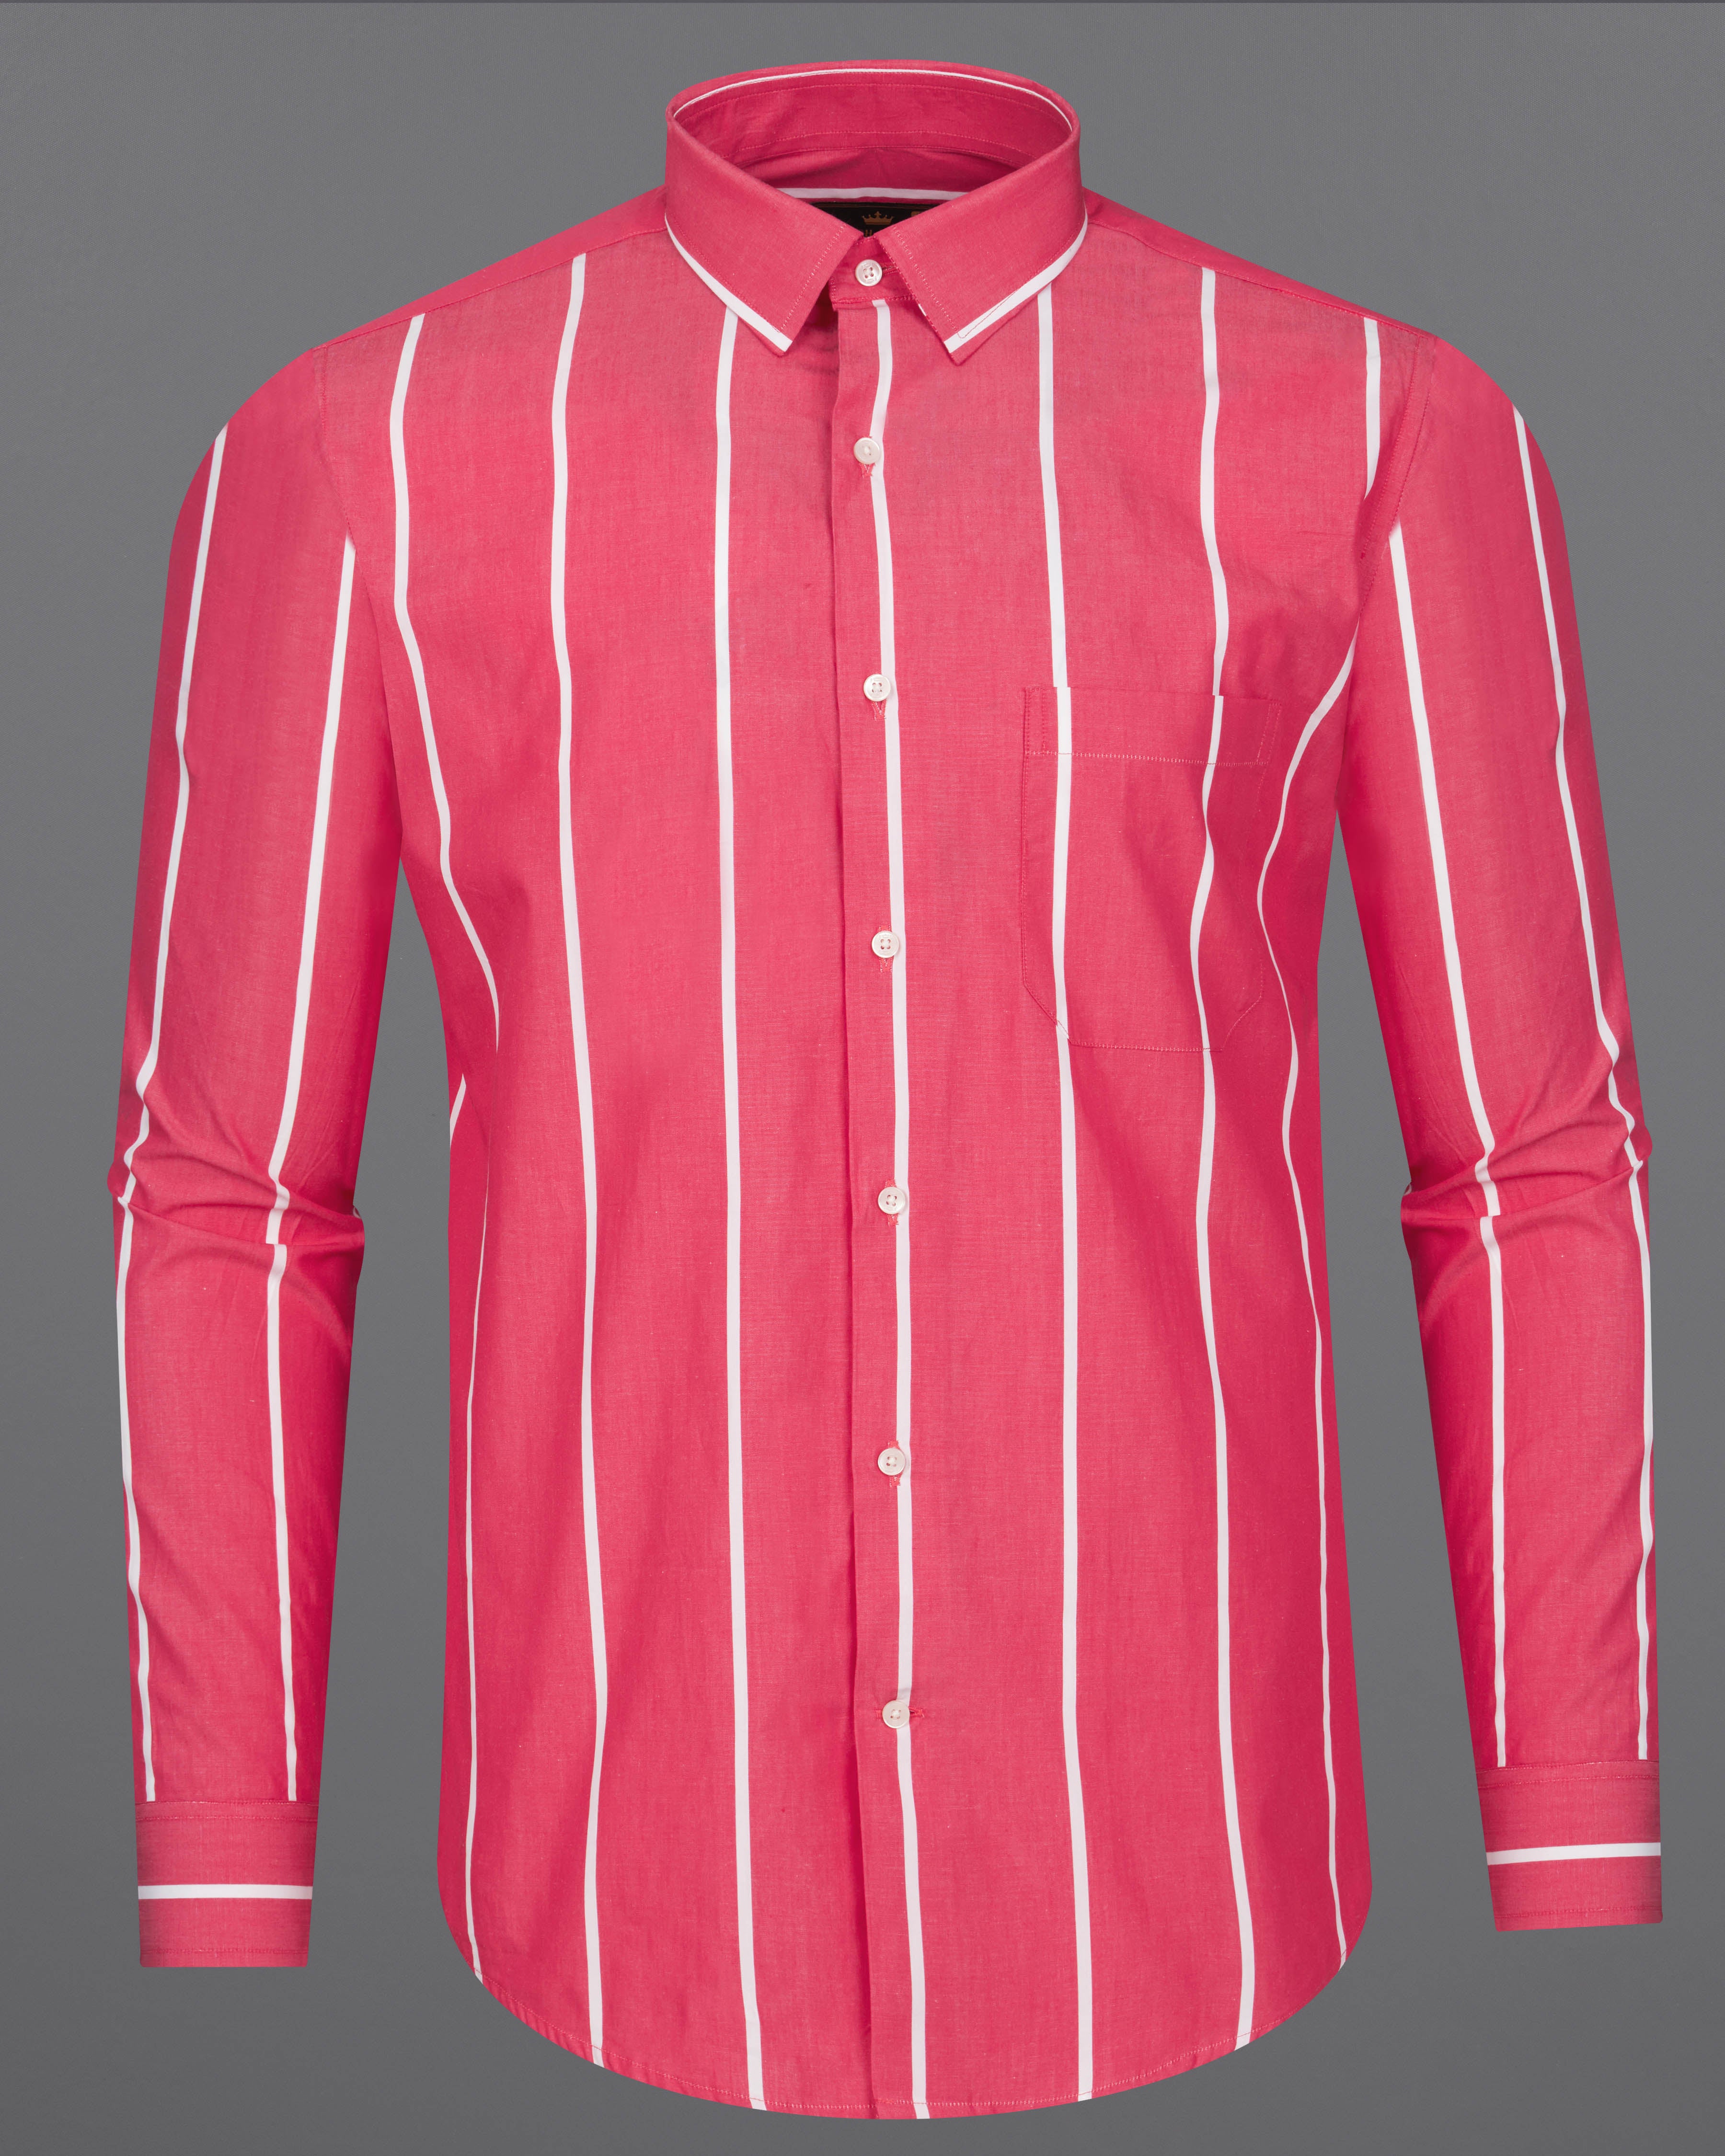 Cabaret Red Striped Premium Cotton Shirt 9217-38,9217-H-38,9217-39,9217-H-39,9217-40,9217-H-40,9217-42,9217-H-42,9217-44,9217-H-44,9217-46,9217-H-46,9217-48,9217-H-48,9217-50,9217-H-50,9217-52,9217-H-52